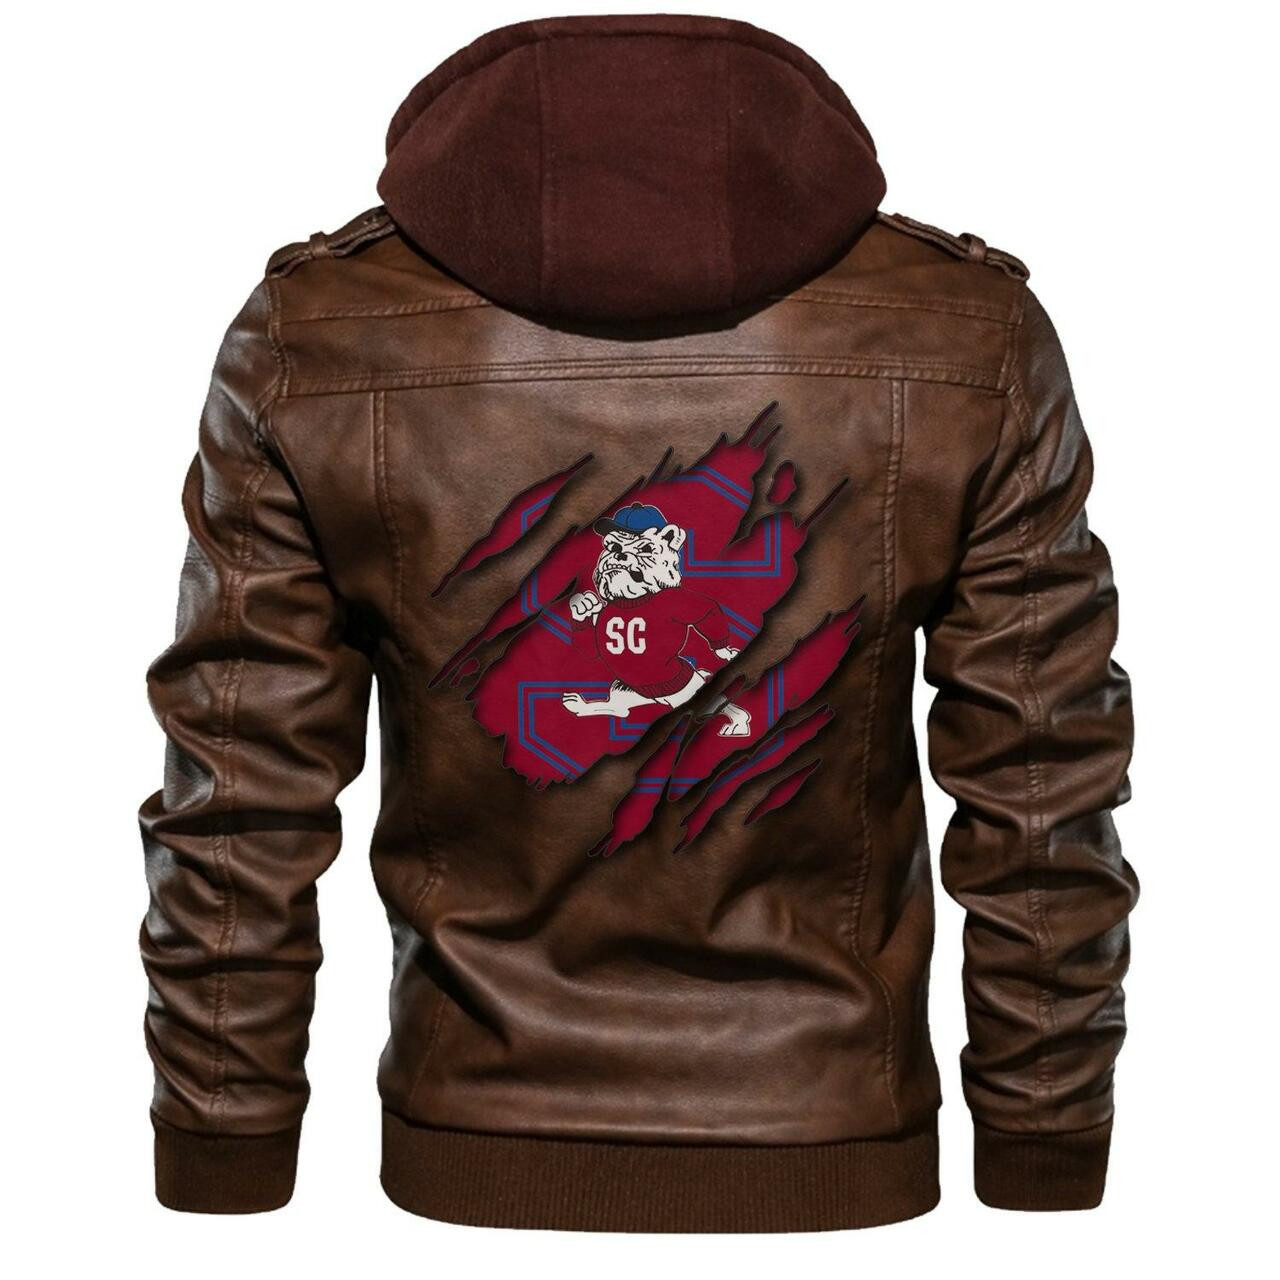 Top leather jacket Sells Best on Techcomshop 45